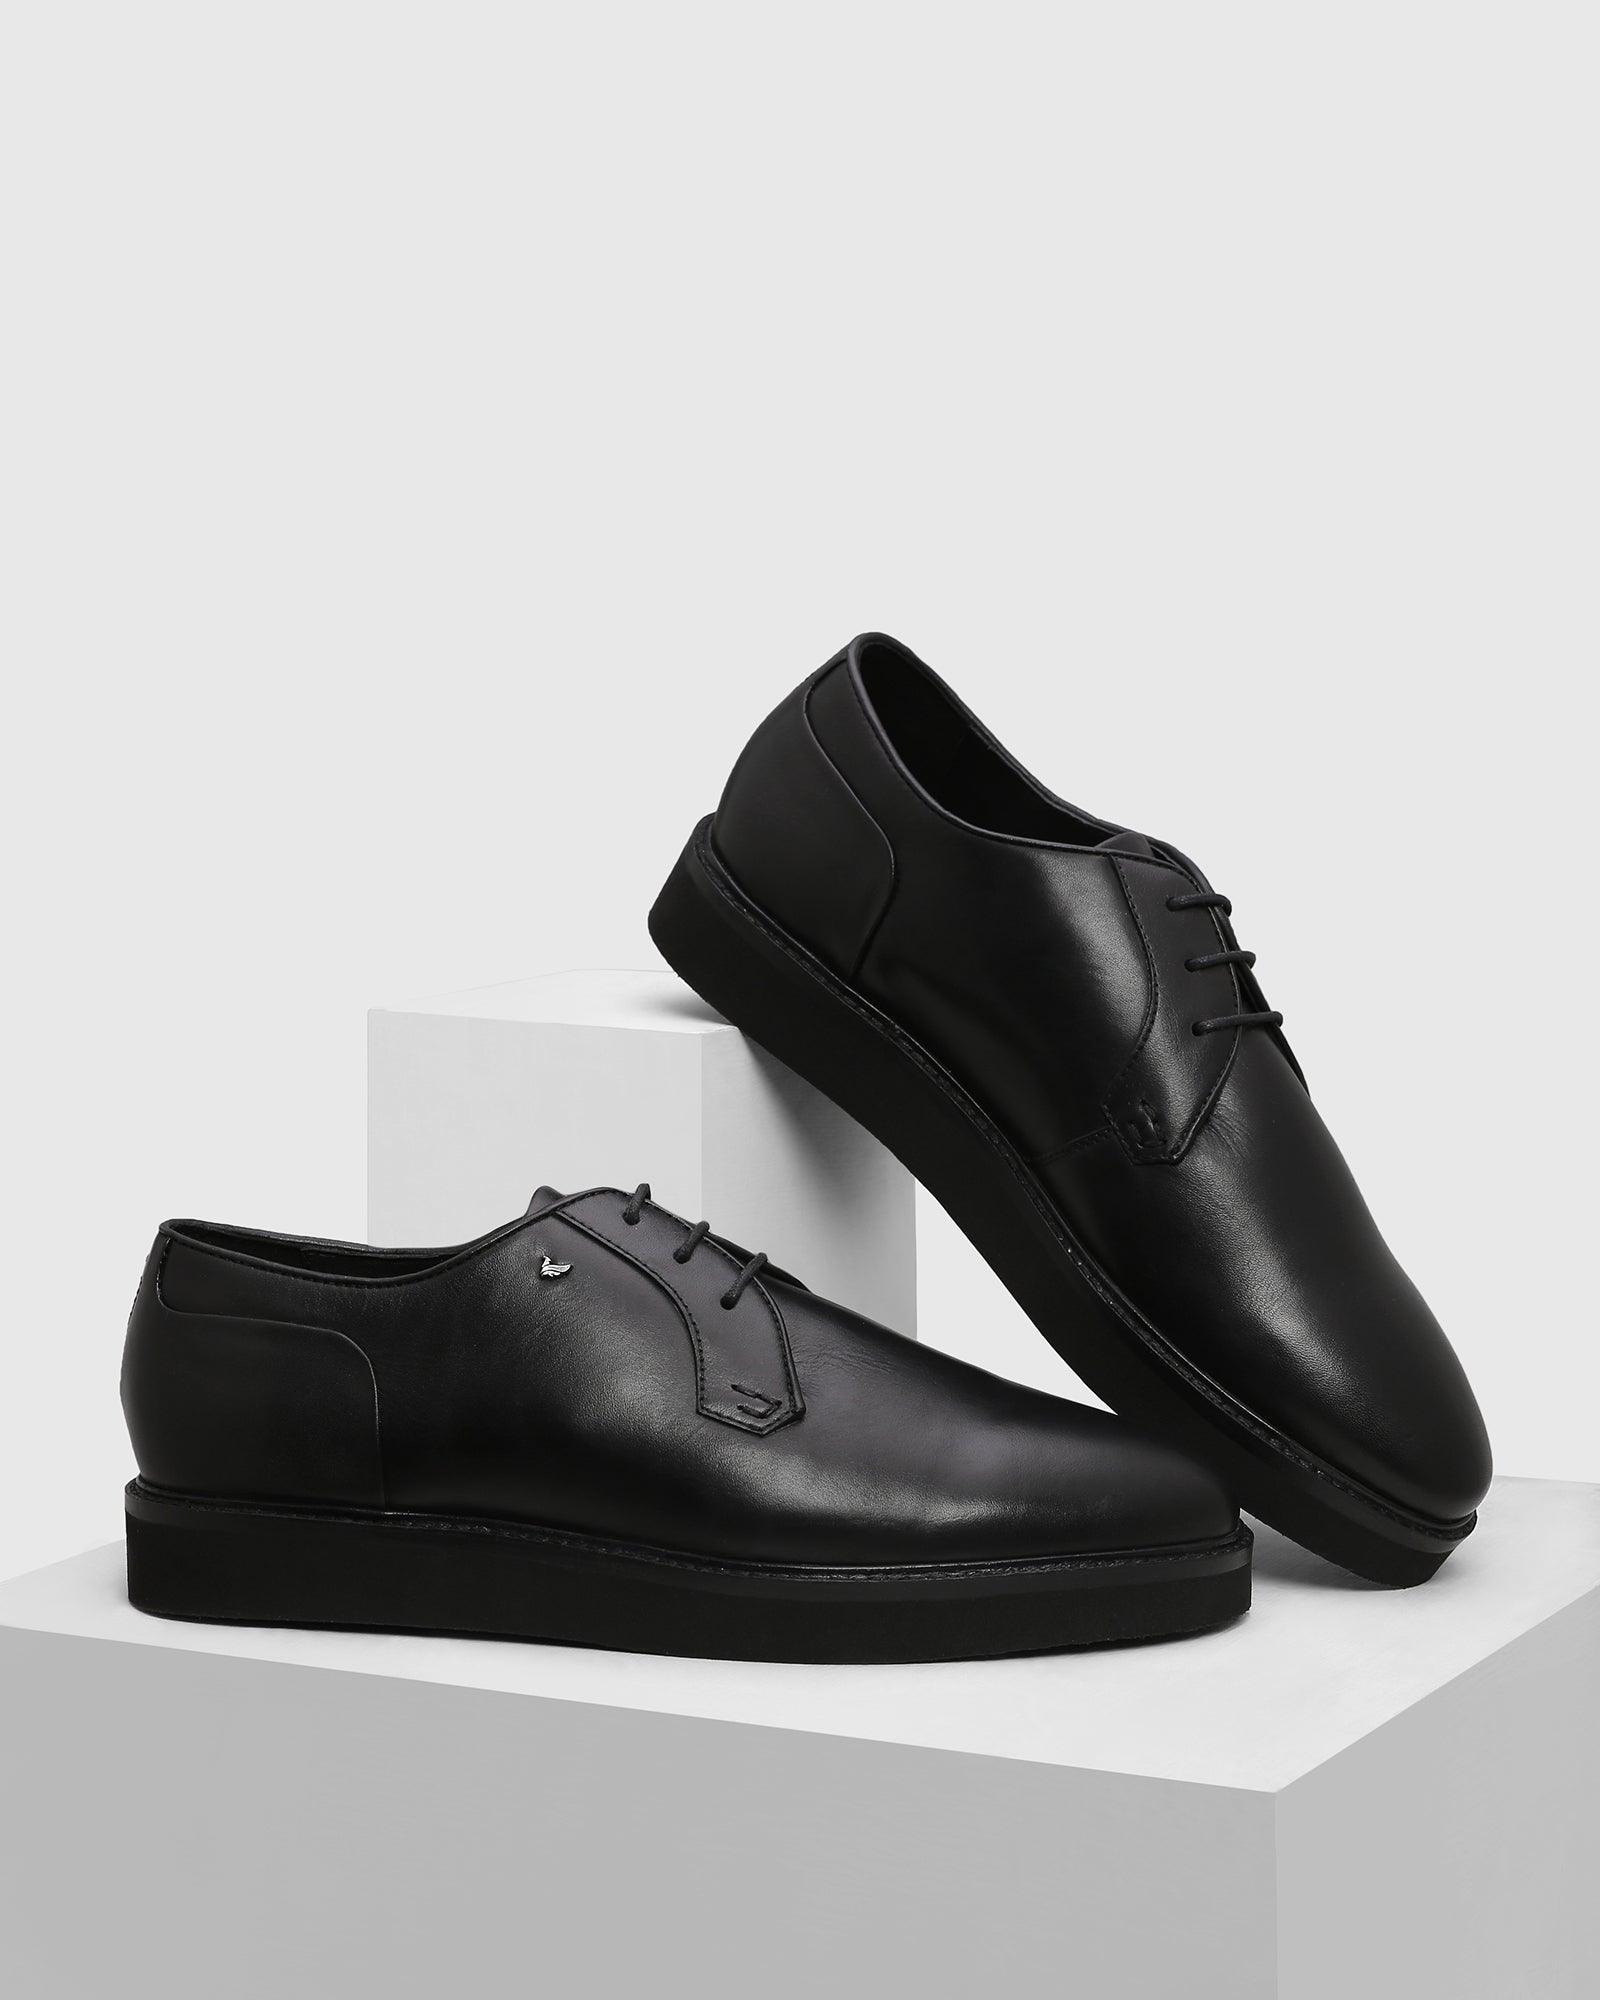 leather-formal-black-solid-derby-shoes---prex